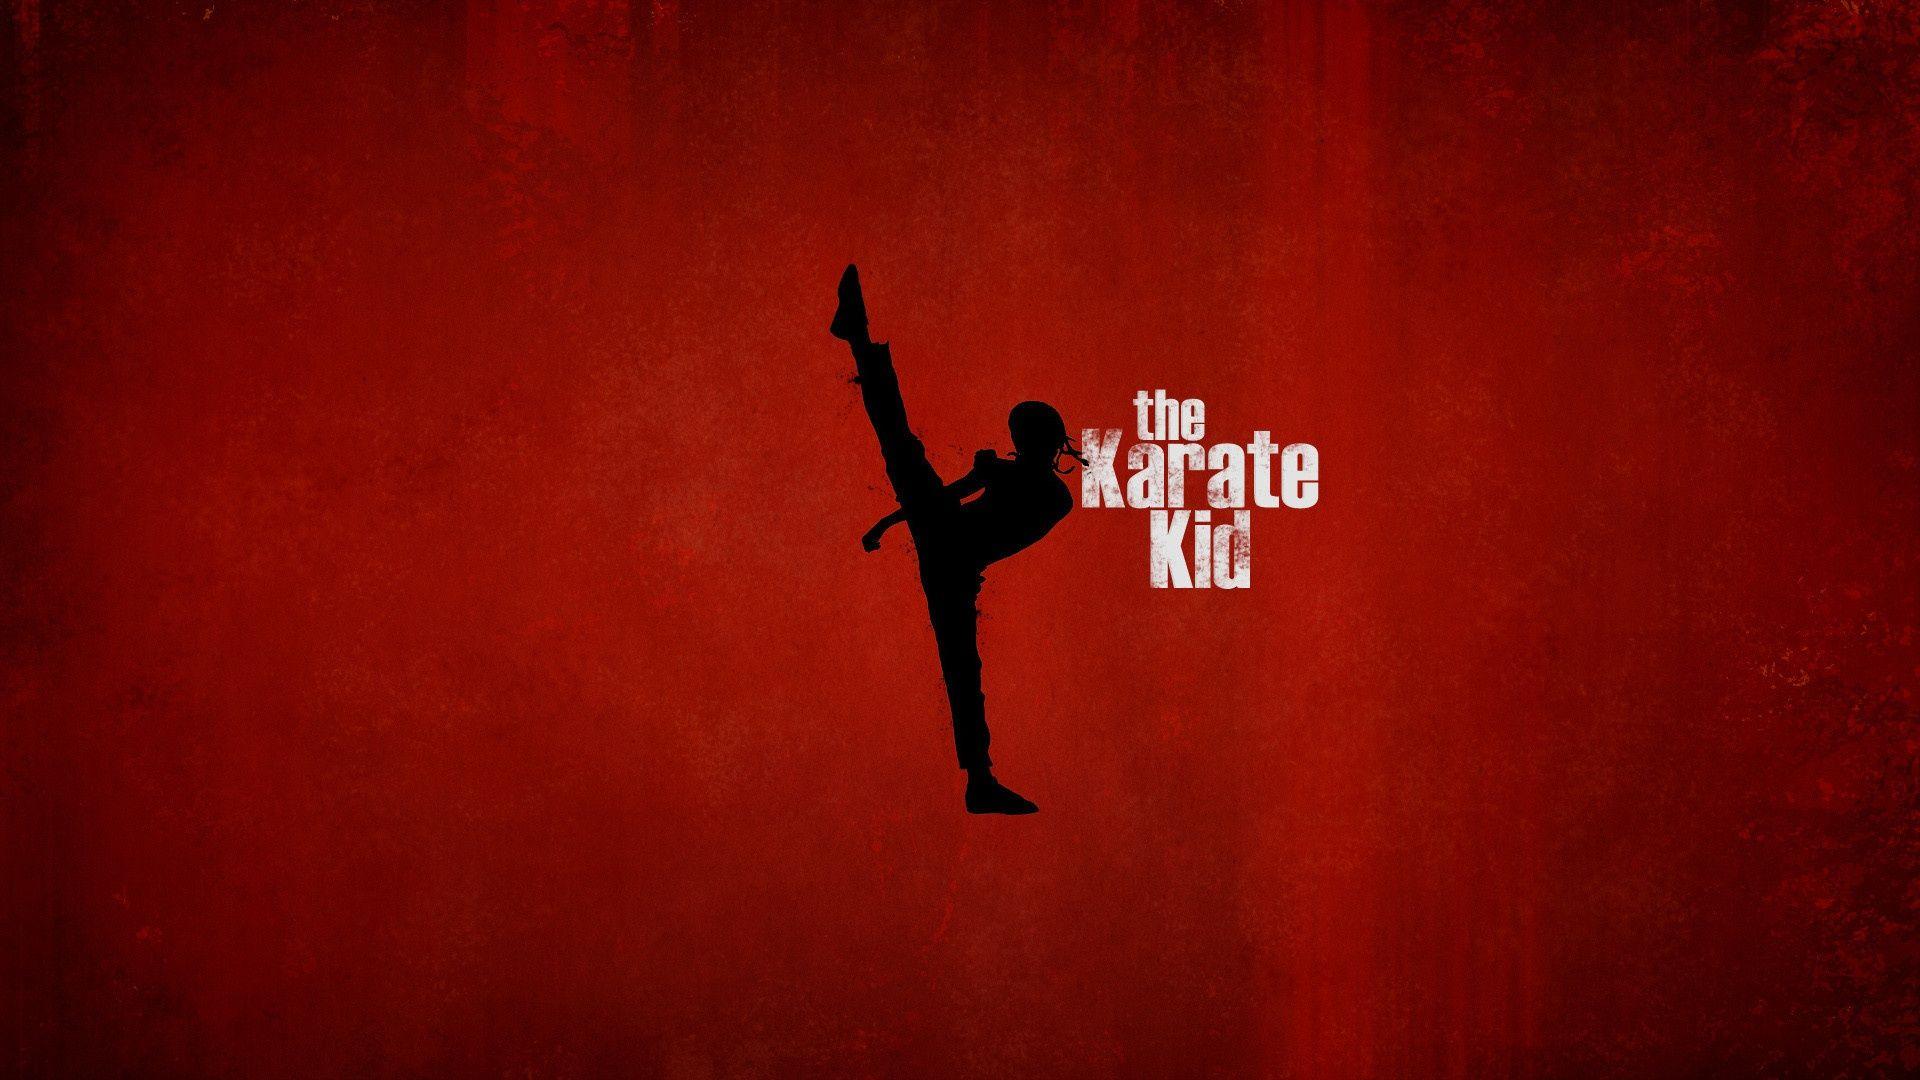 Full HD Wallpaper karate kid red background logo poster, Desktop